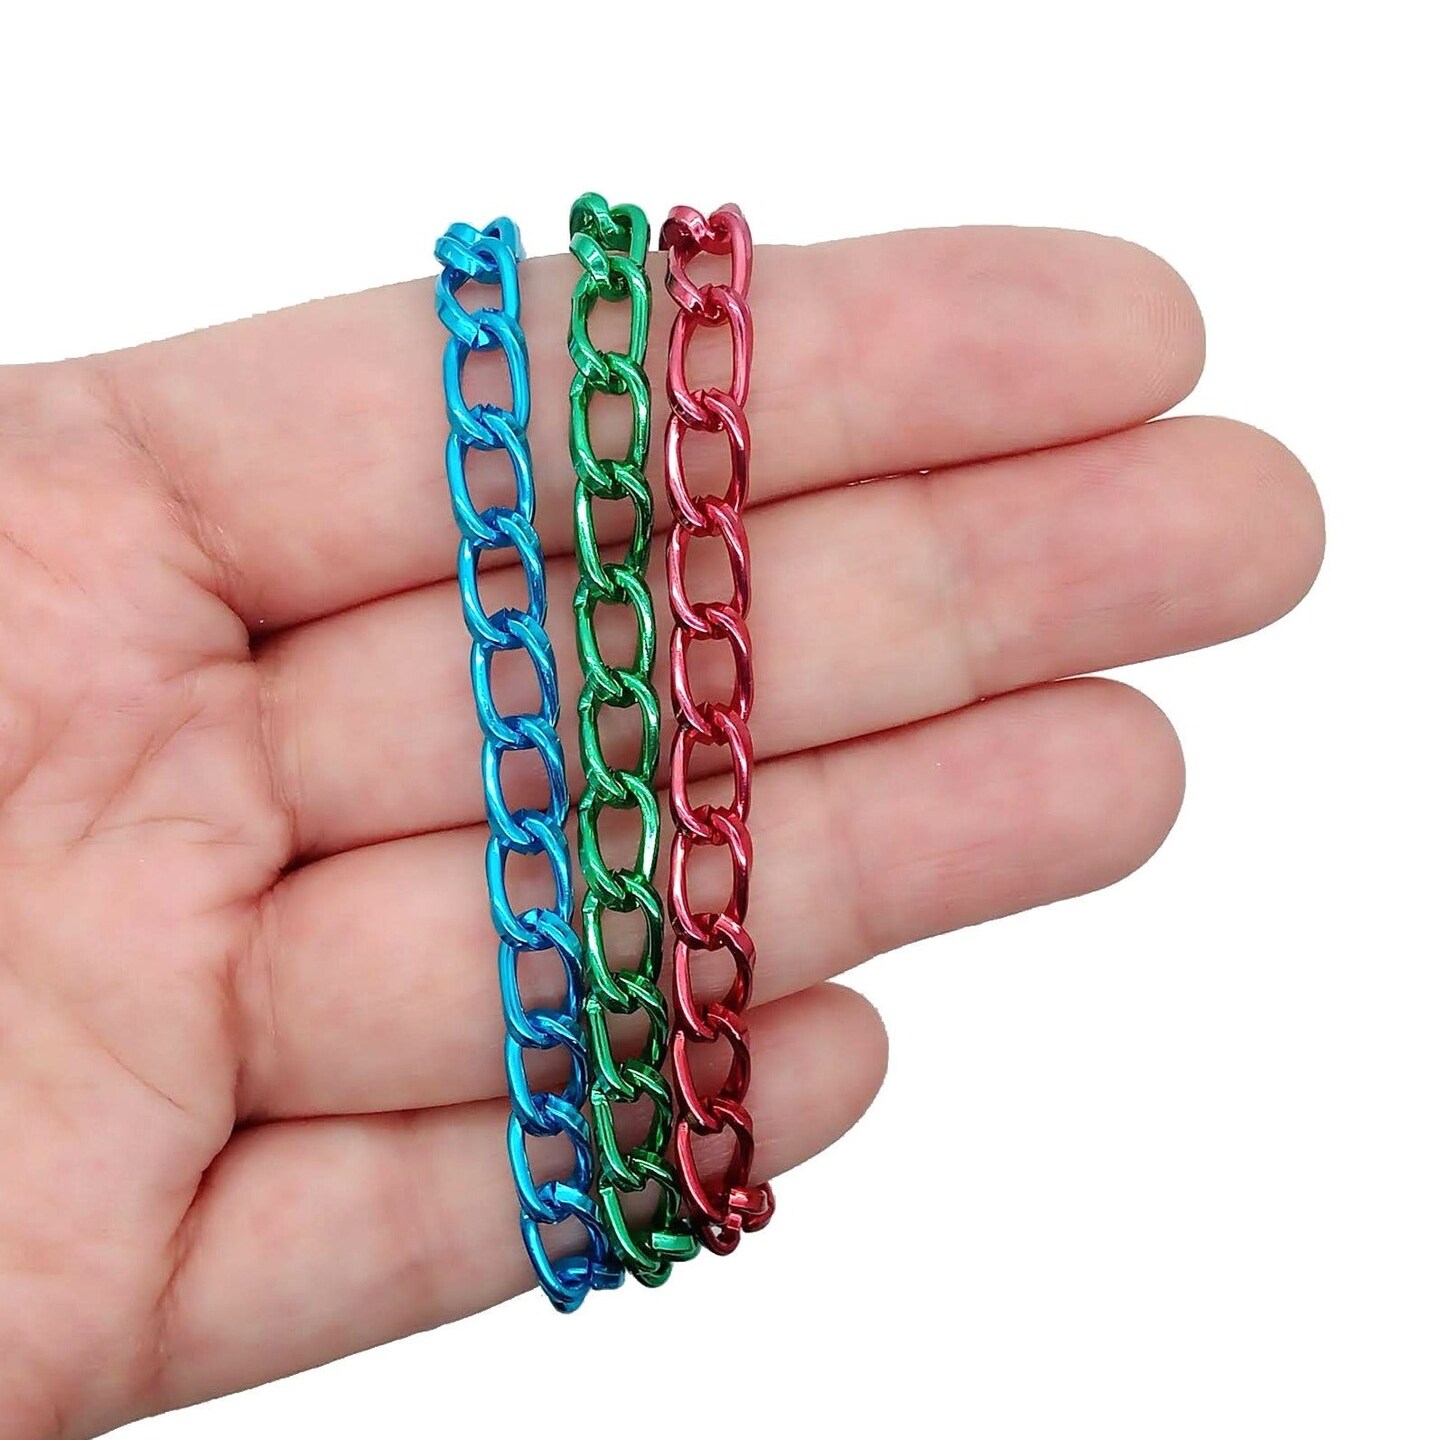 Aluminum Charm Bracelet Chains, 3pc Colorful Lightweight Blank ...